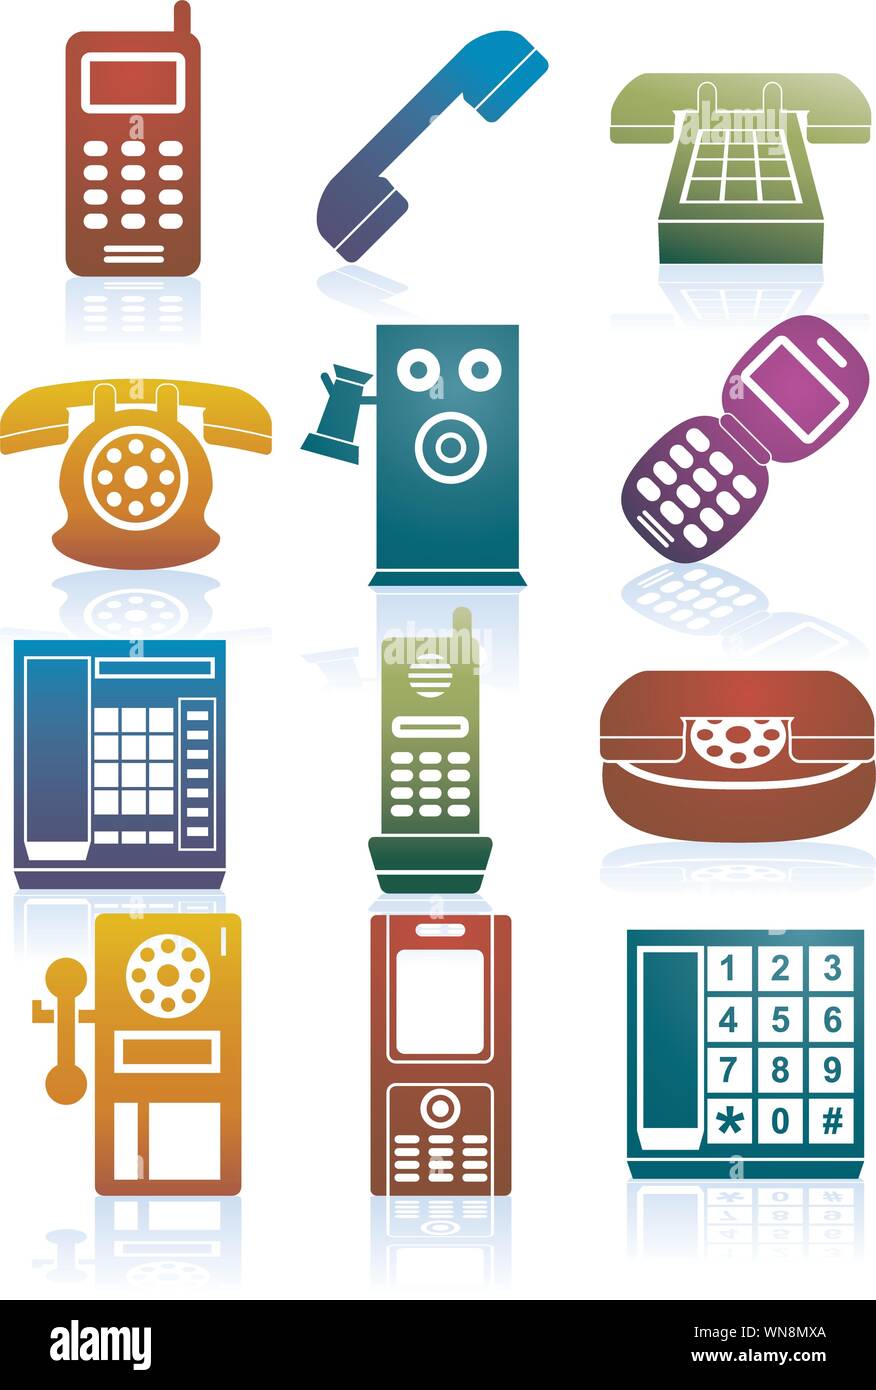 Phone Icons Stock Vector